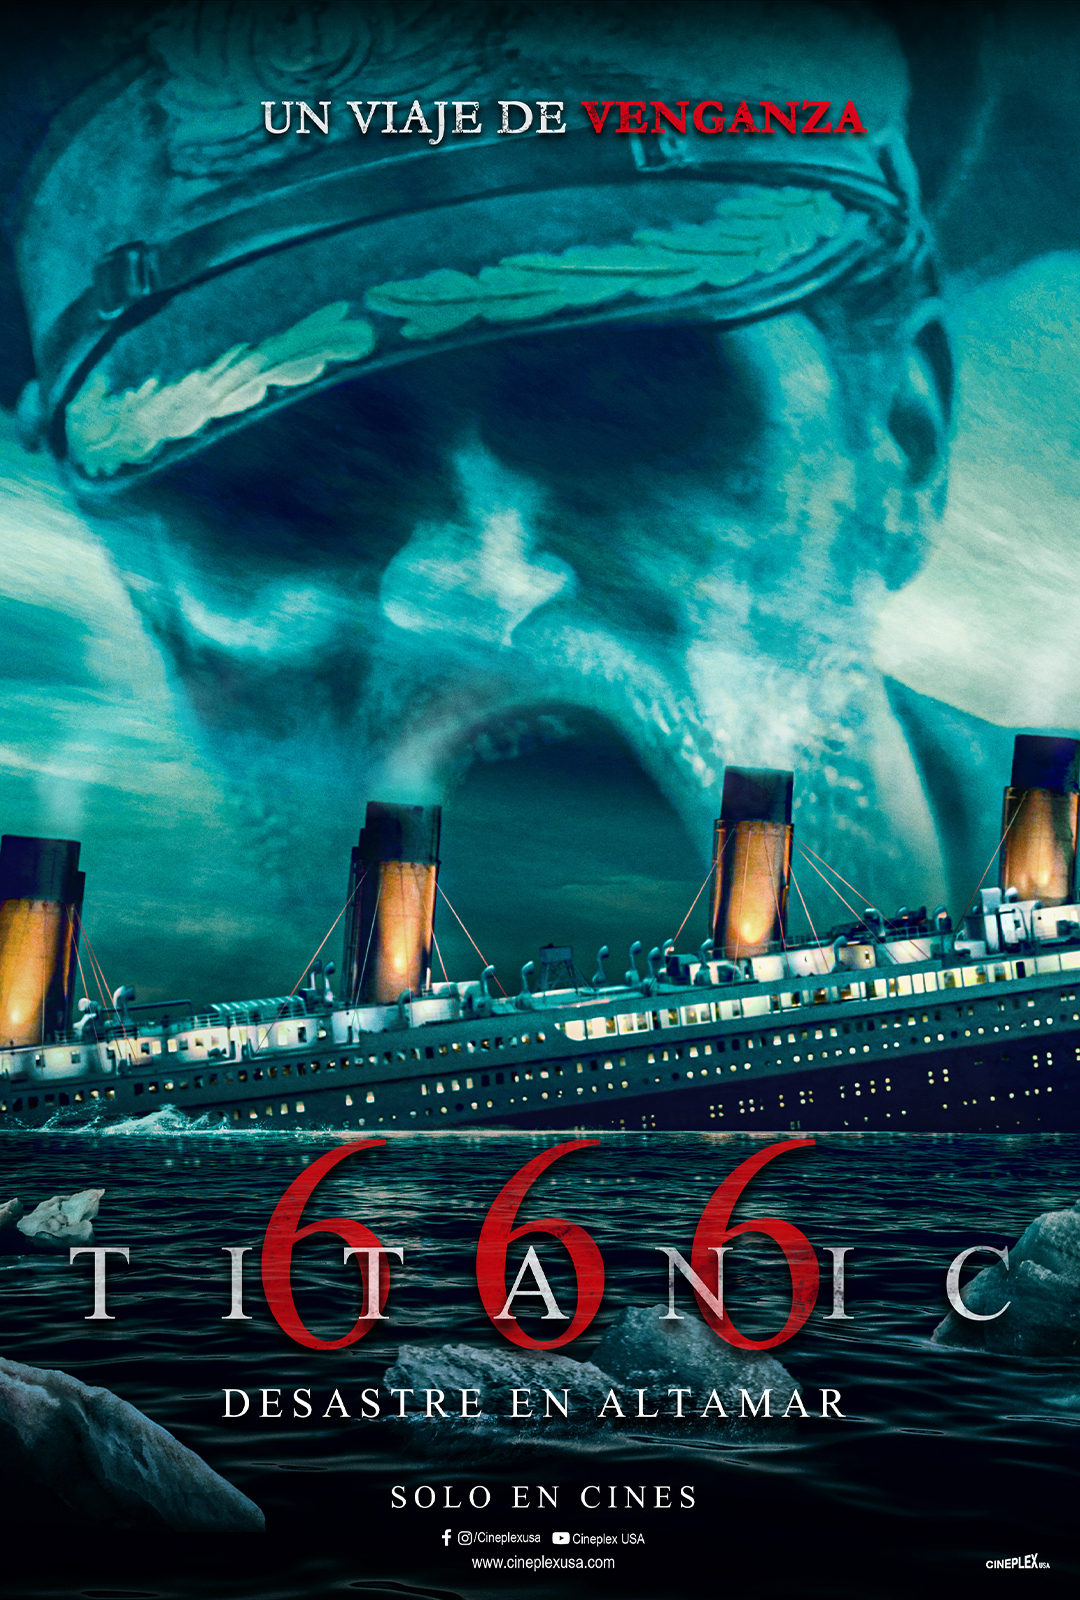 Caribbean Cinemas | Titanic 666